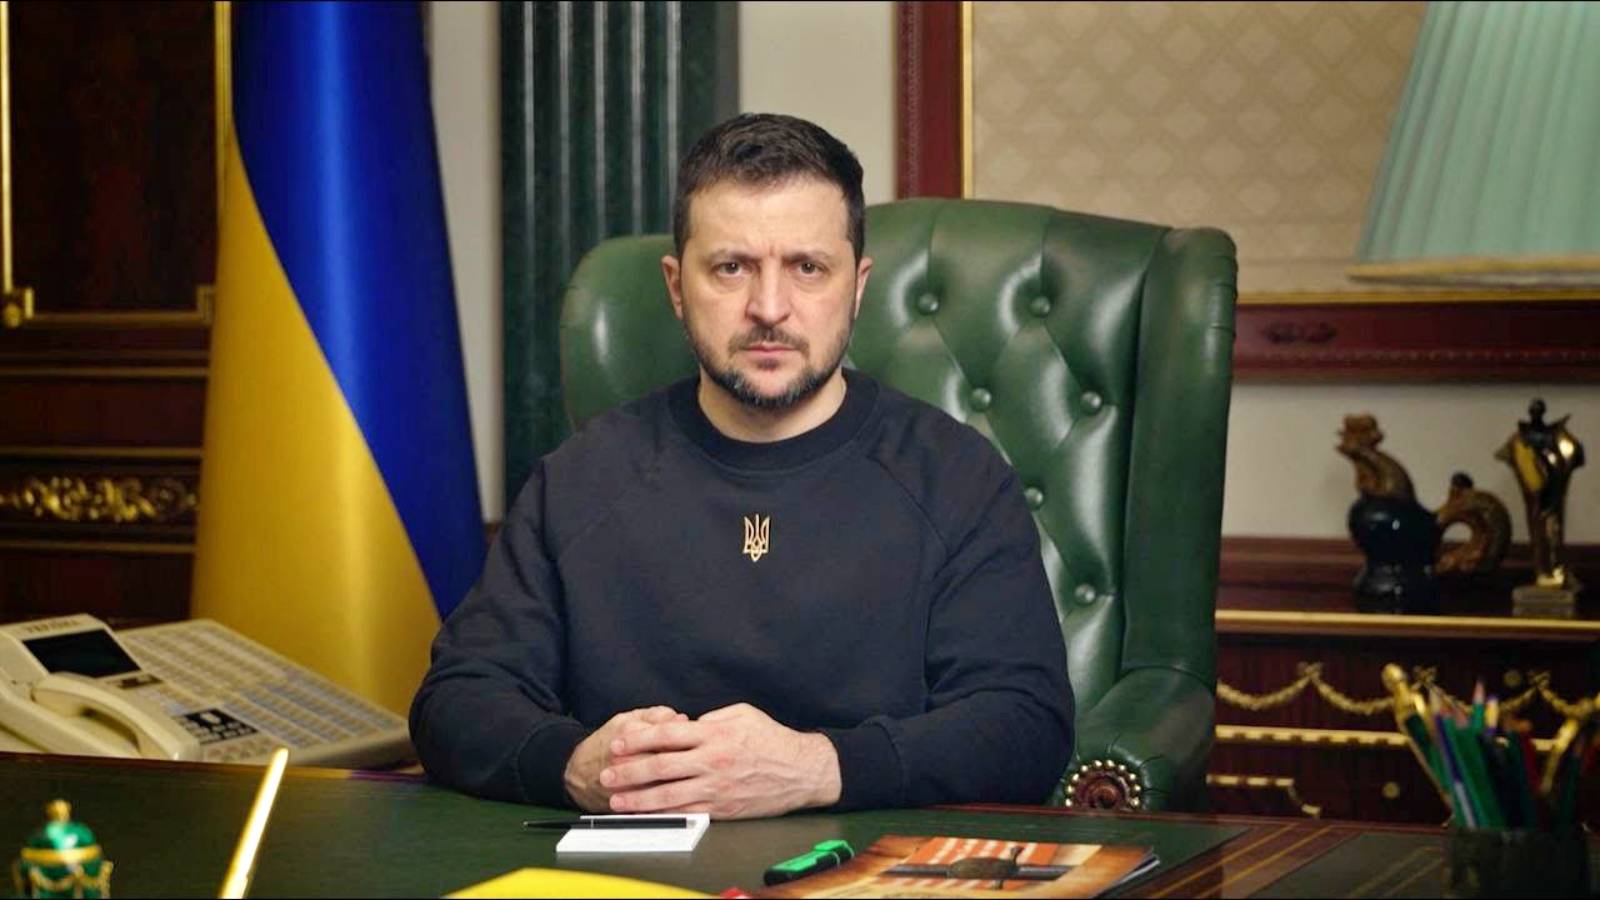 Volodimir Zelenski Noi Declaratii Oficiale ULTIM MOMENT Atacurile Rusiei Ucraina